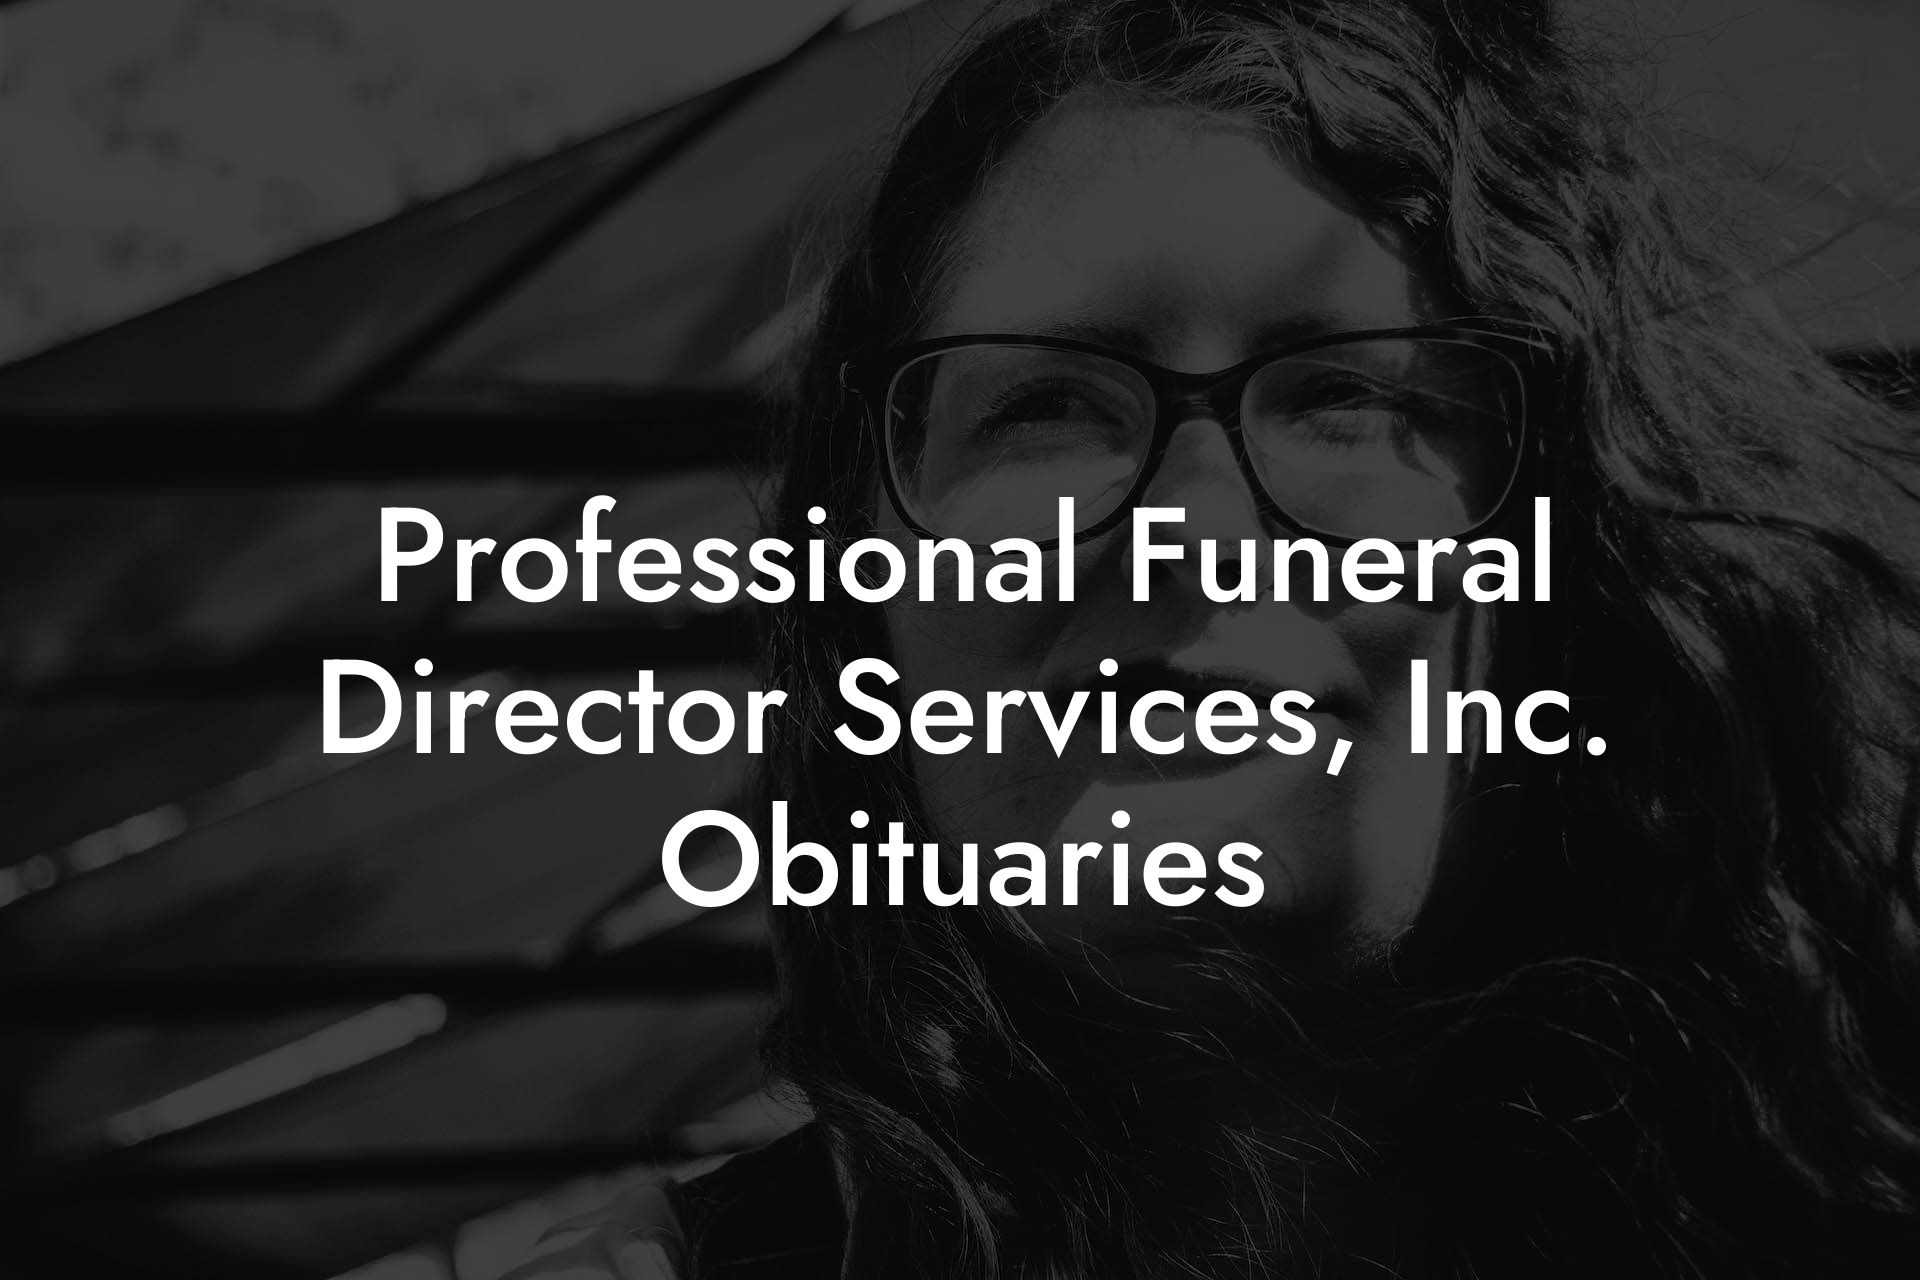 Professional Funeral Director Services, Inc. Obituaries